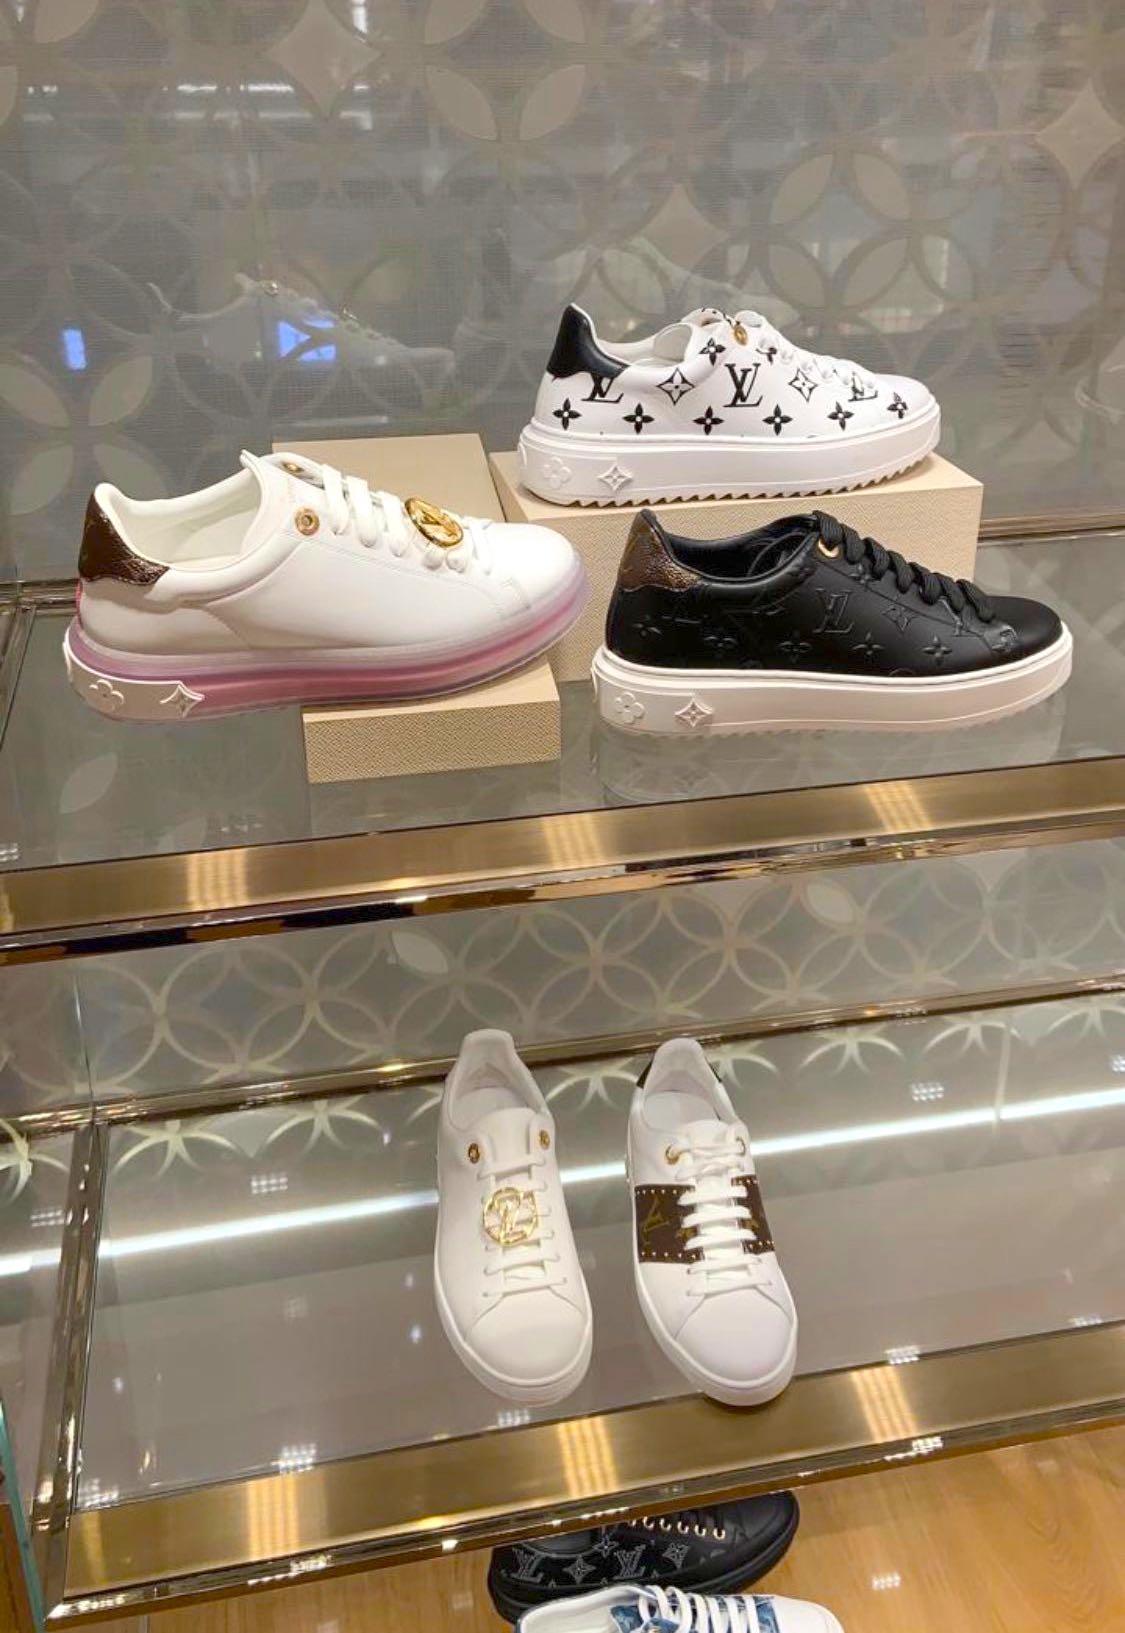 Buy Louis Vuitton Wmns Time Out Sneaker 'White Black Monogram